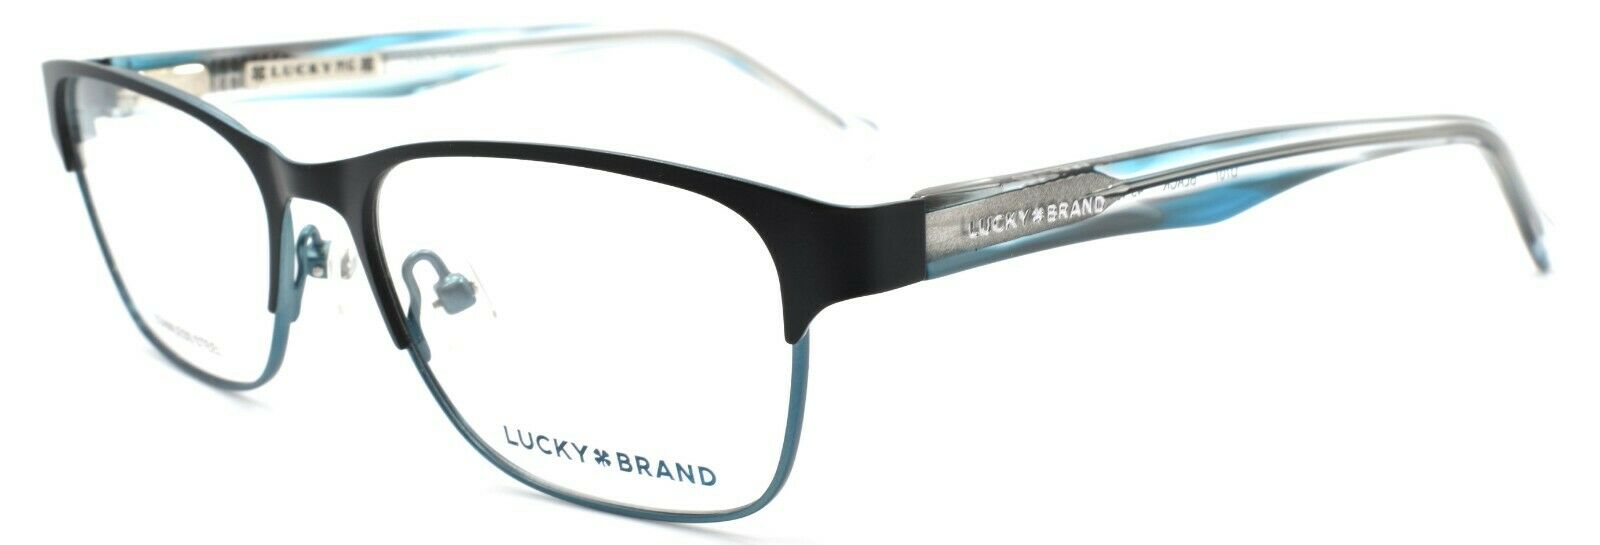 1-LUCKY BRAND D707 Eyeglasses Frames SMALL 49-15-130 Black + CASE-751286295801-IKSpecs